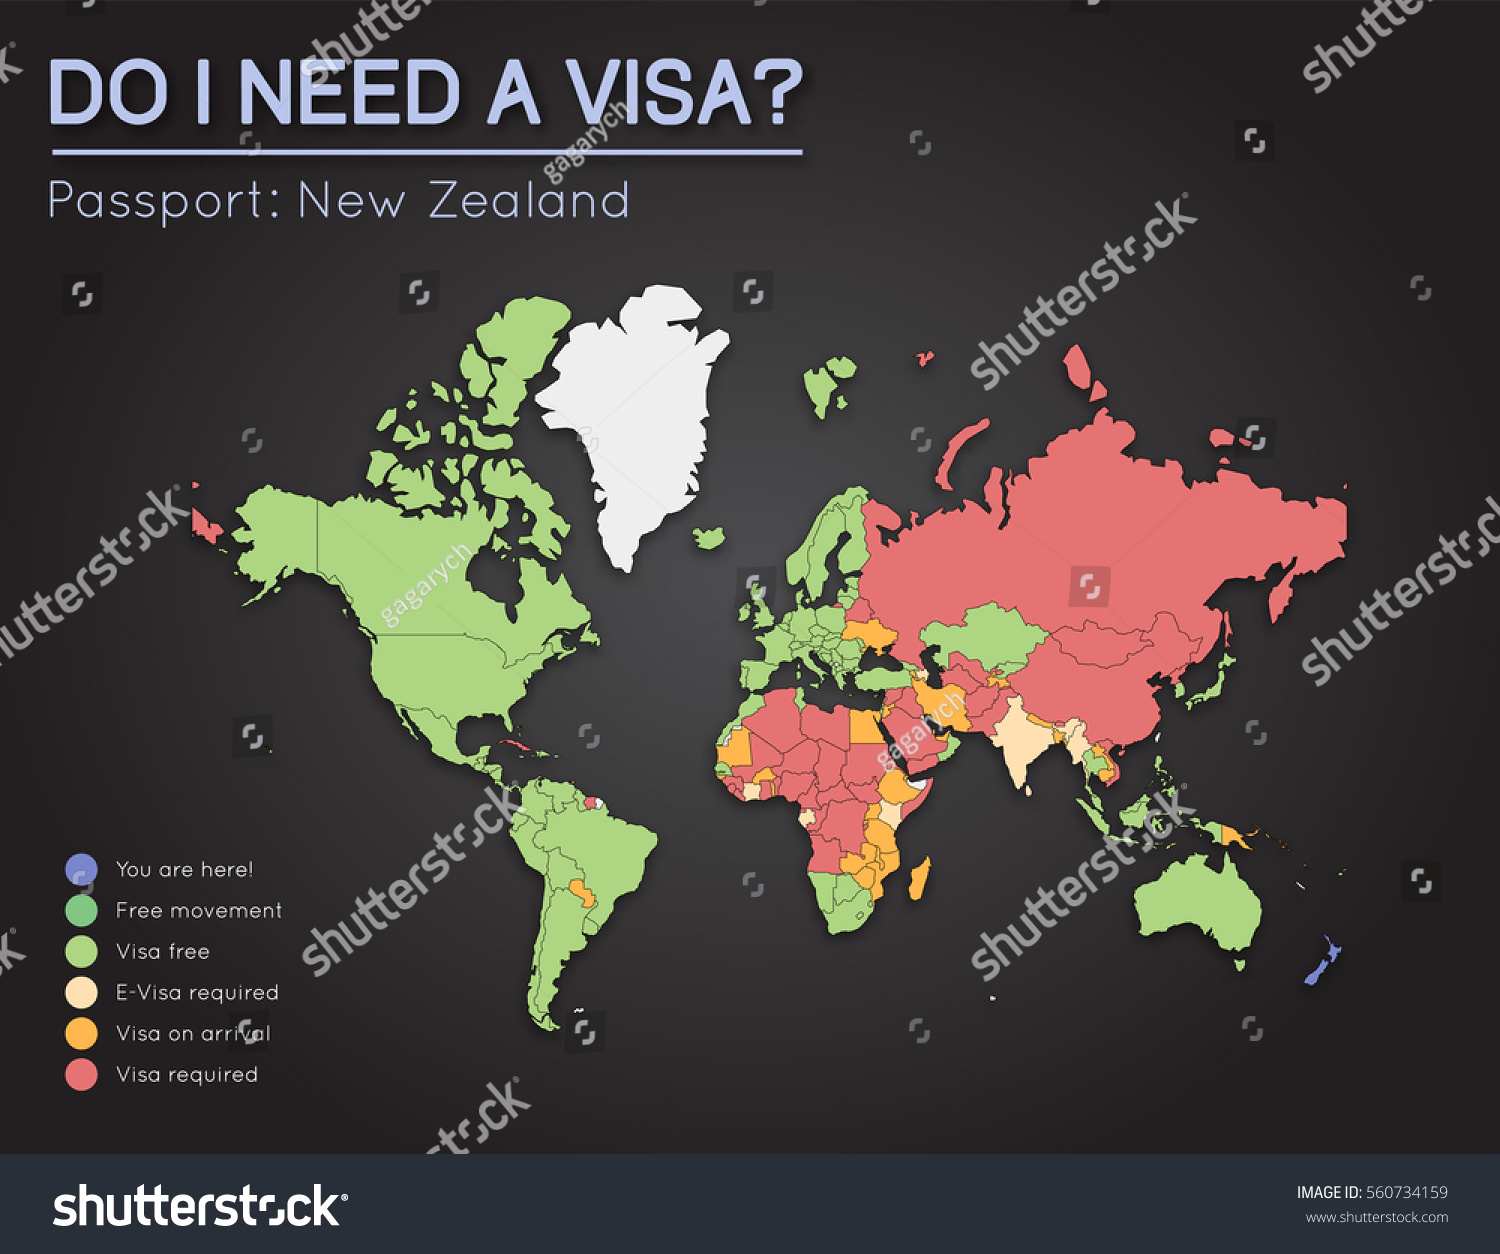 Visas Information New Zealand Passport Holders เวกเตอร์สต็อก ปลอดค่าลิขสิทธิ์ 560734159 1207